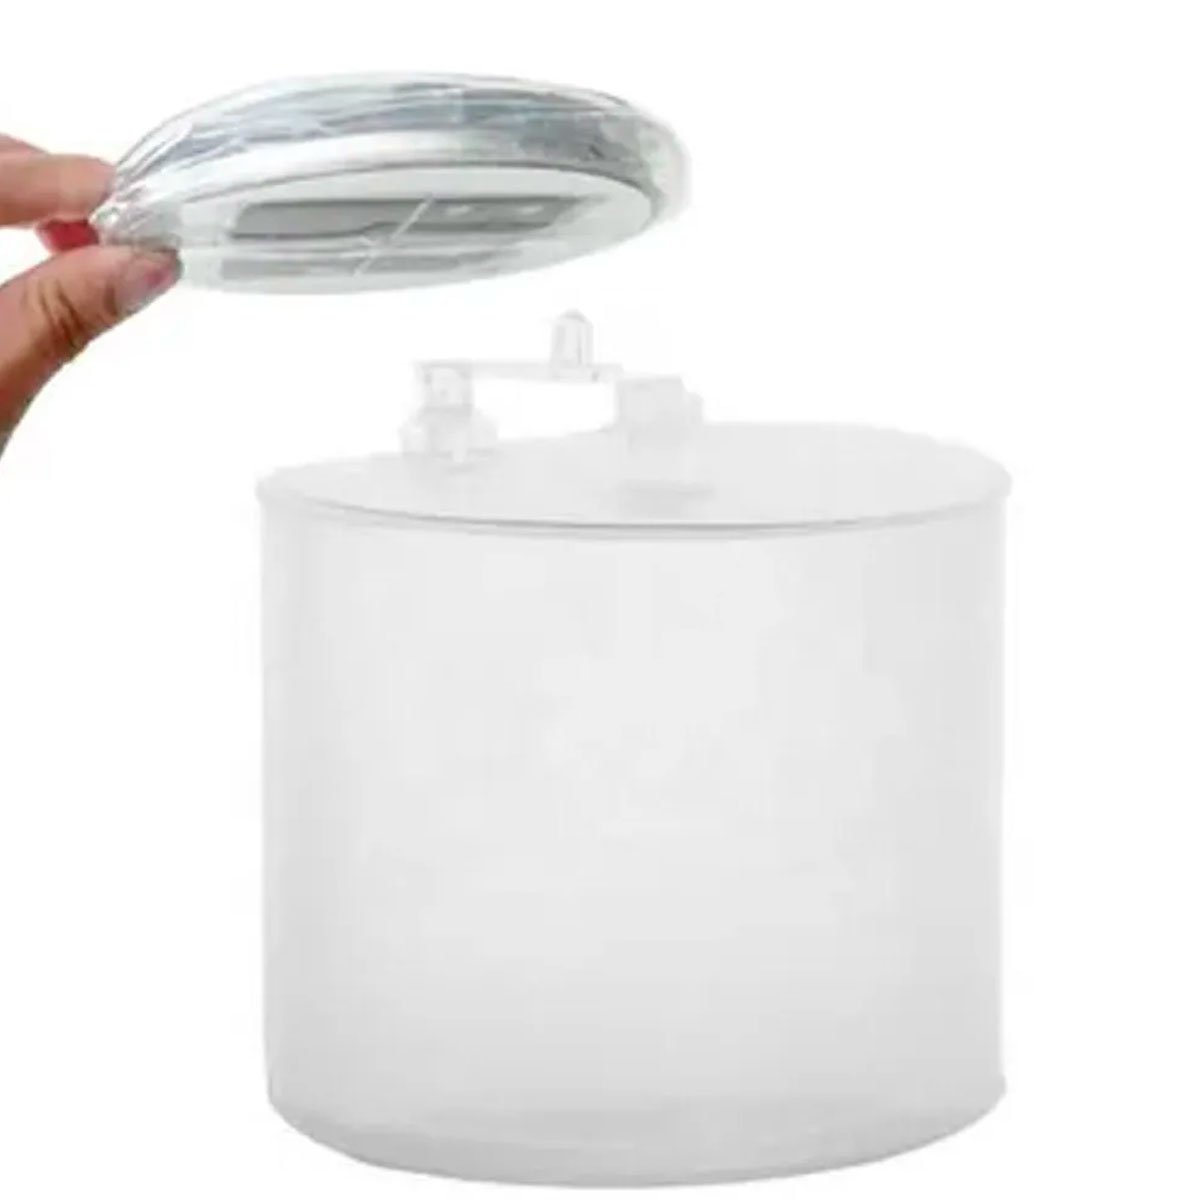 02 luminaria solar dobravel portatil flutuante led branco